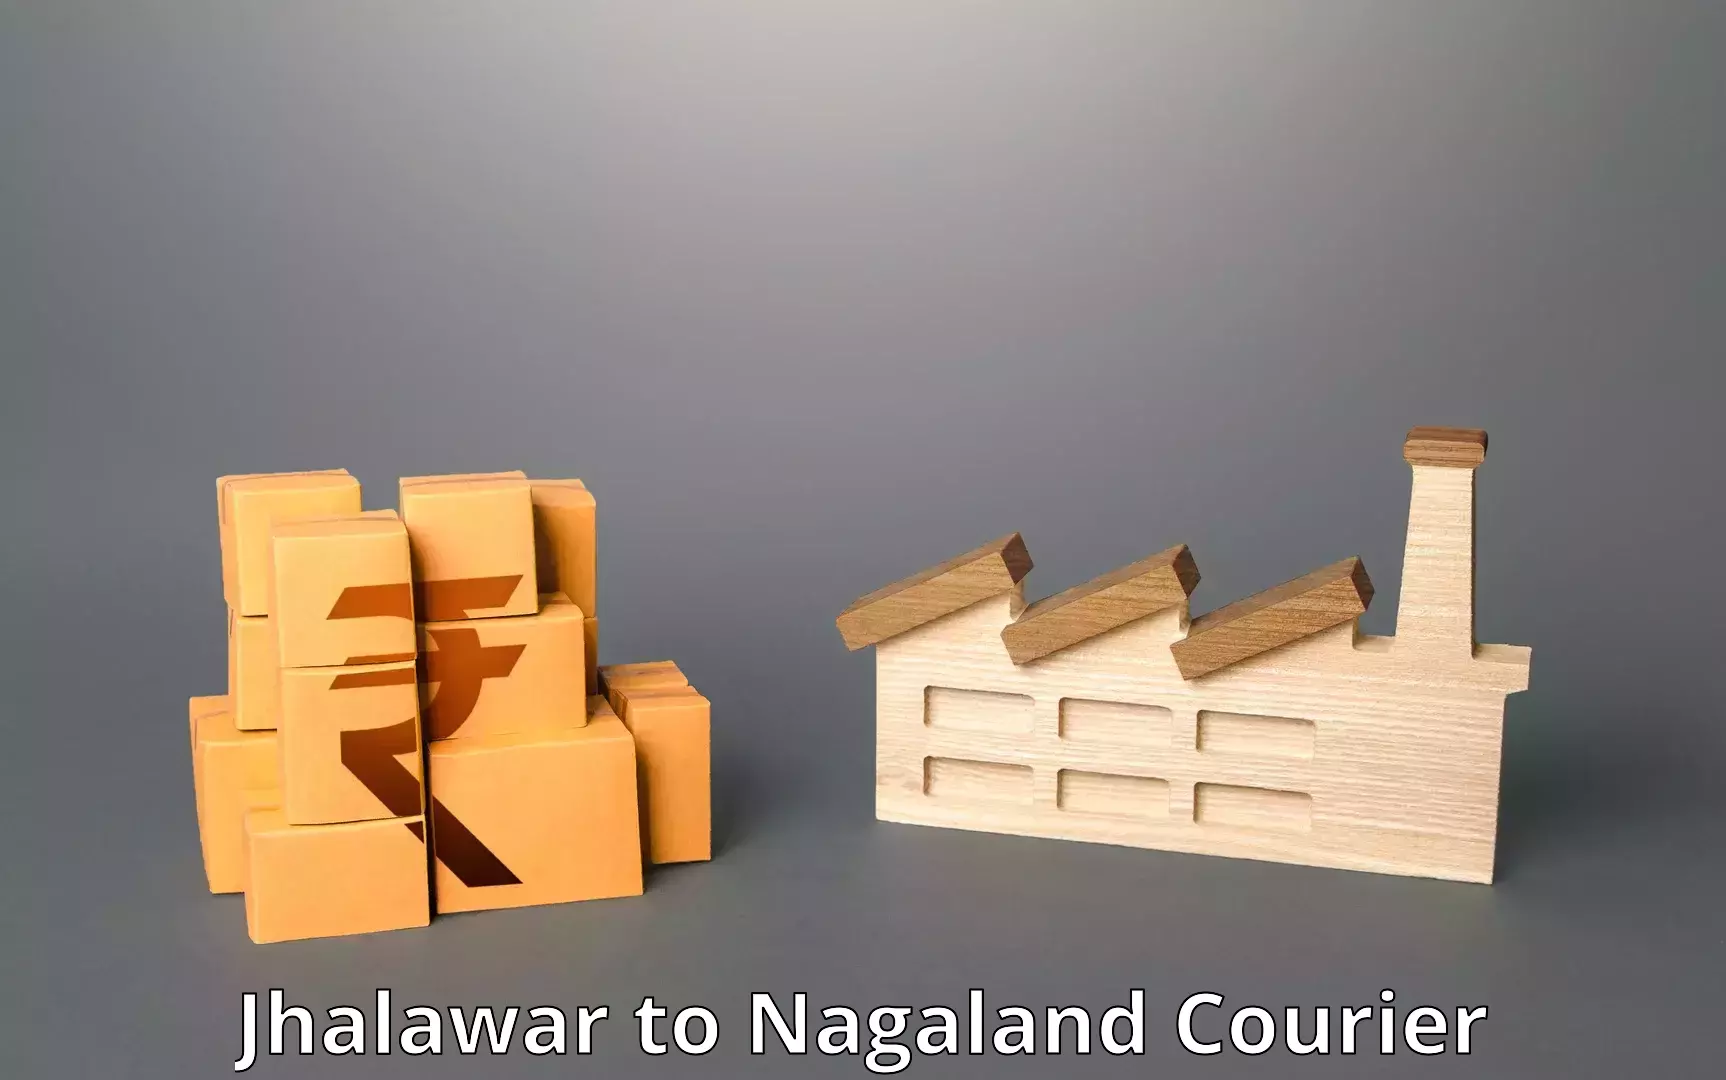 Courier service efficiency Jhalawar to Nagaland